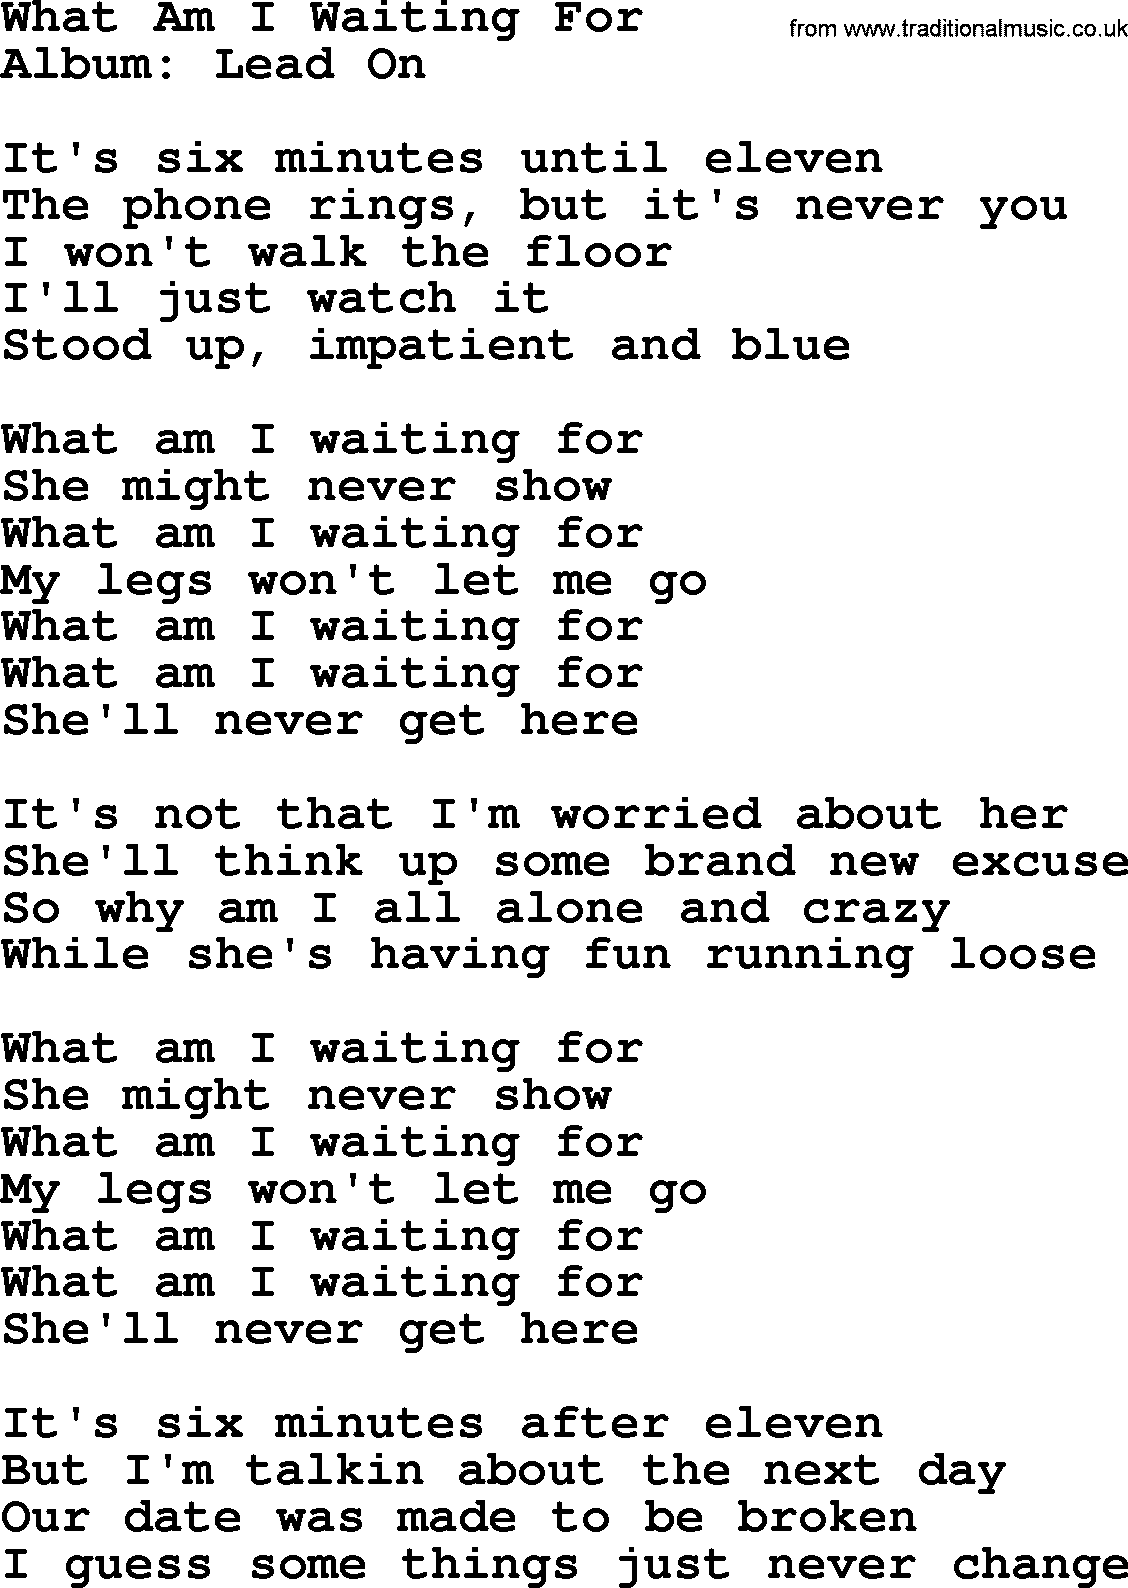 George Strait song: What Am I Waiting For, lyrics